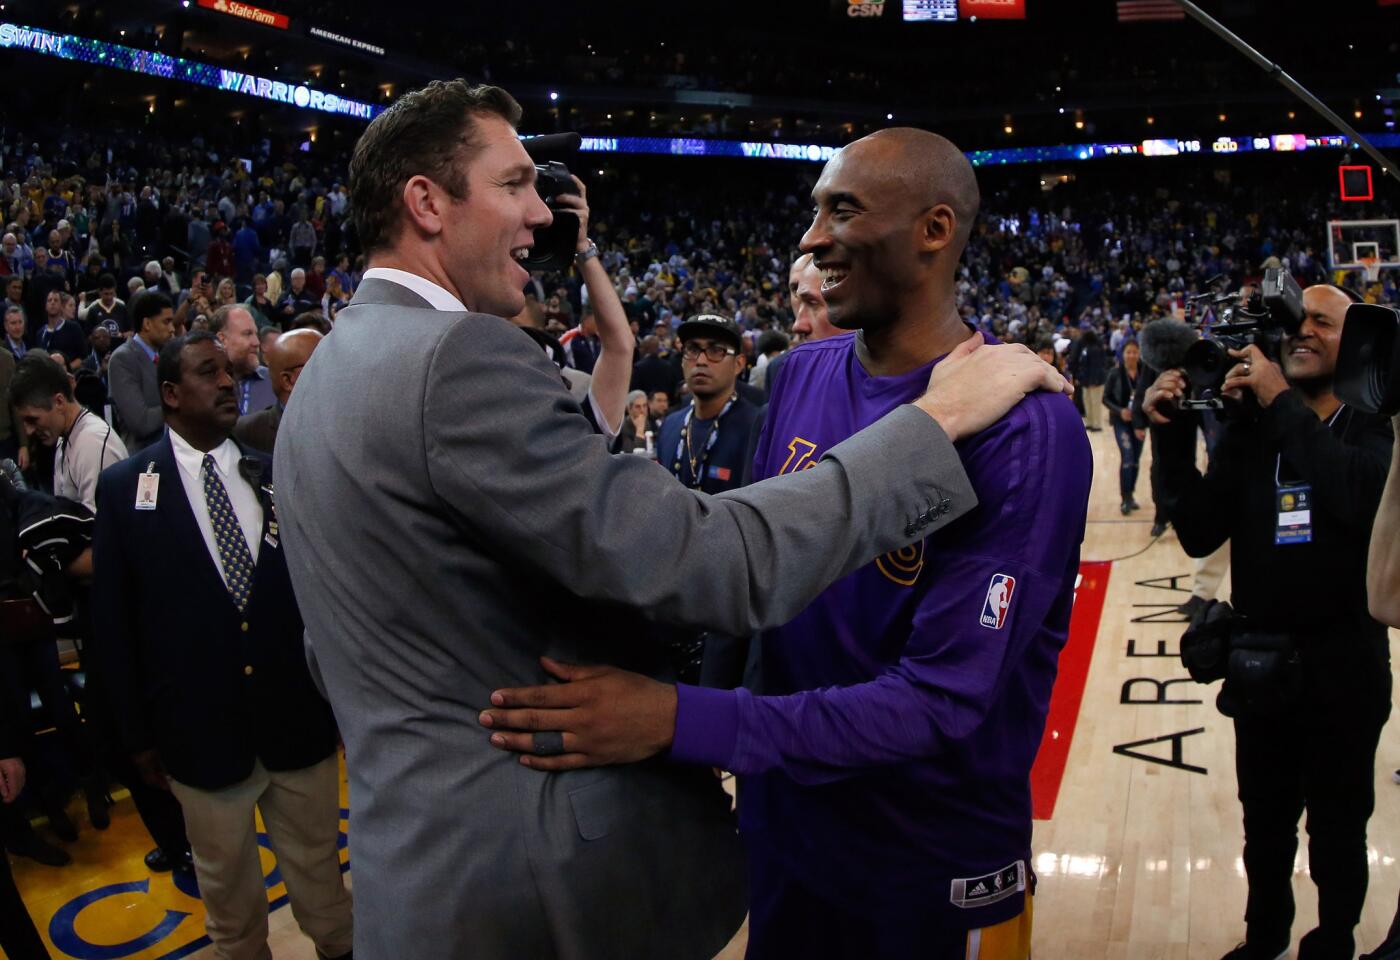 Los Angeles Lakers' Kobe Bryant hugs Golden State Warriors interim head coach Luke Walton after their game on Thursday.